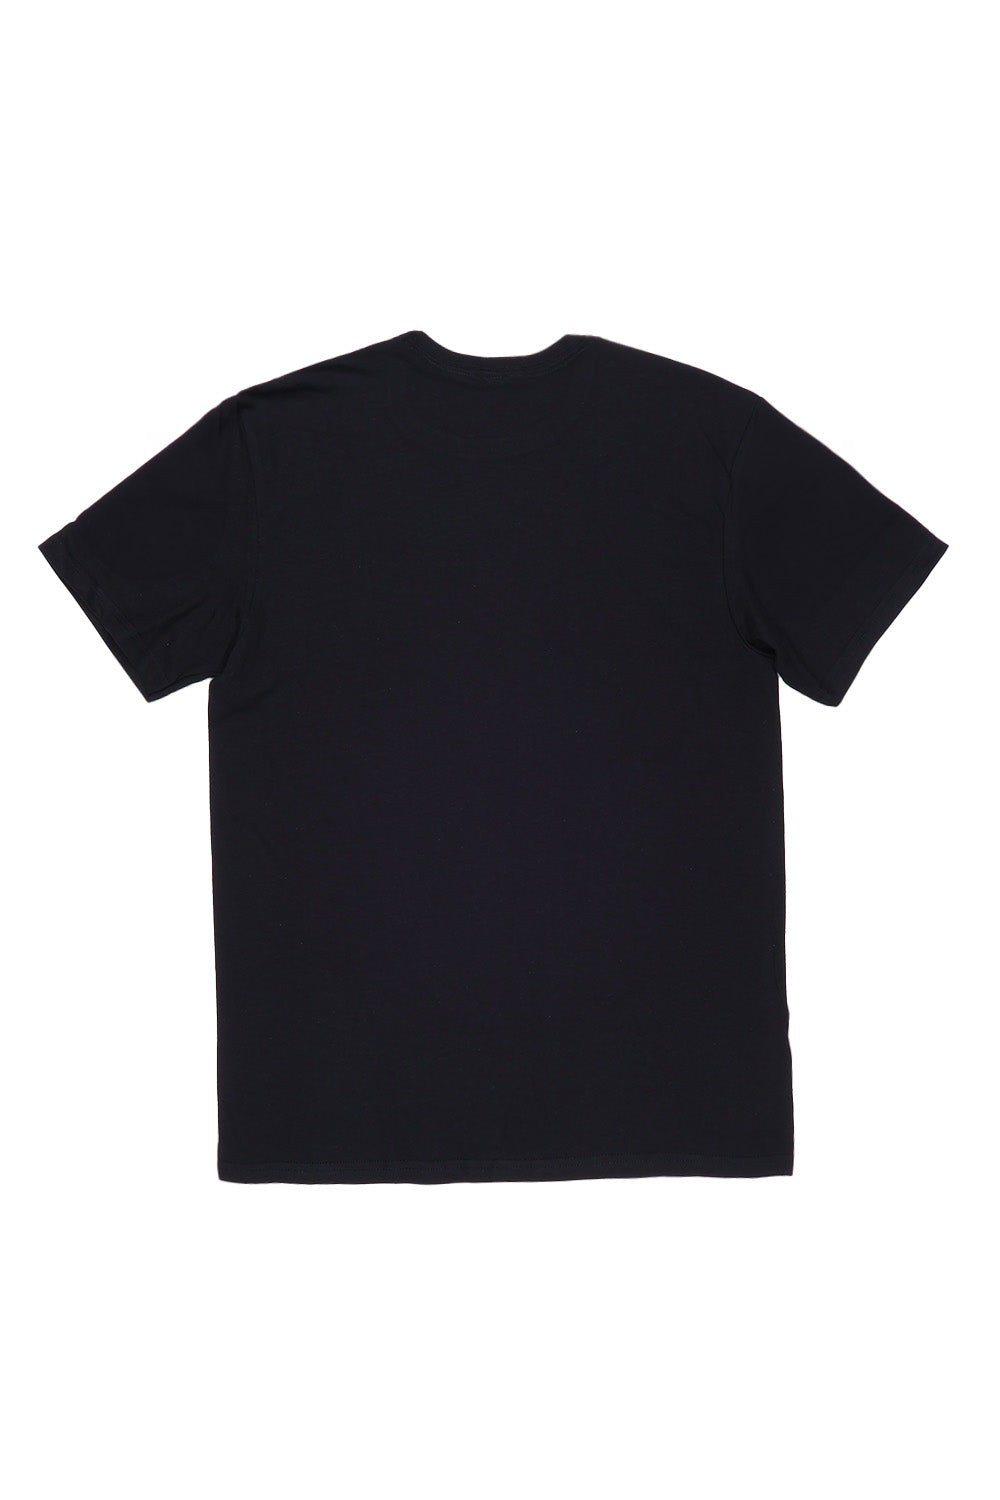 Sakura T-Shirt in Black (Custom Packs)